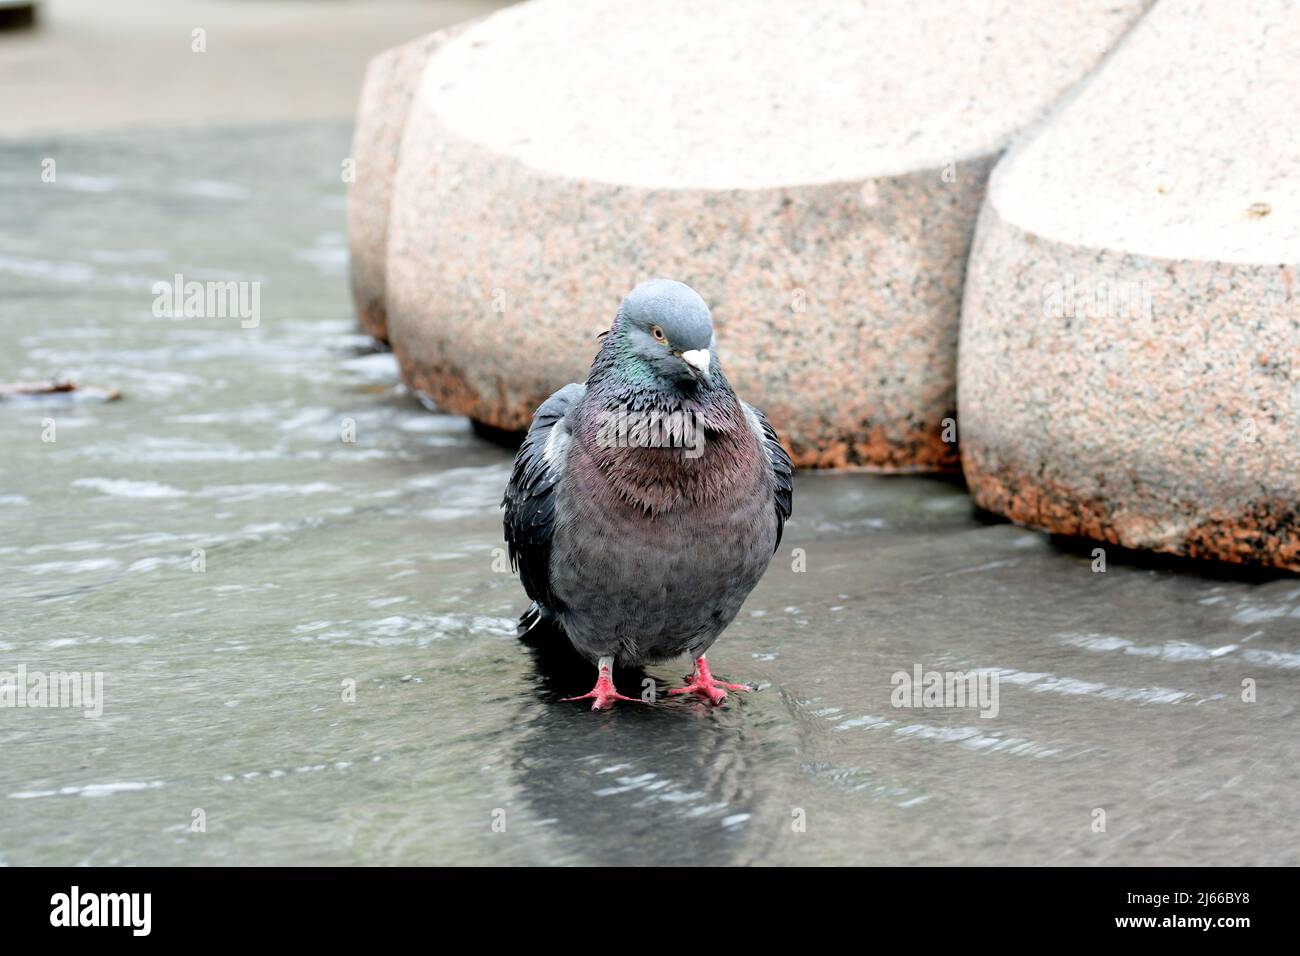 Urban pigeons in fountain Stock Photo